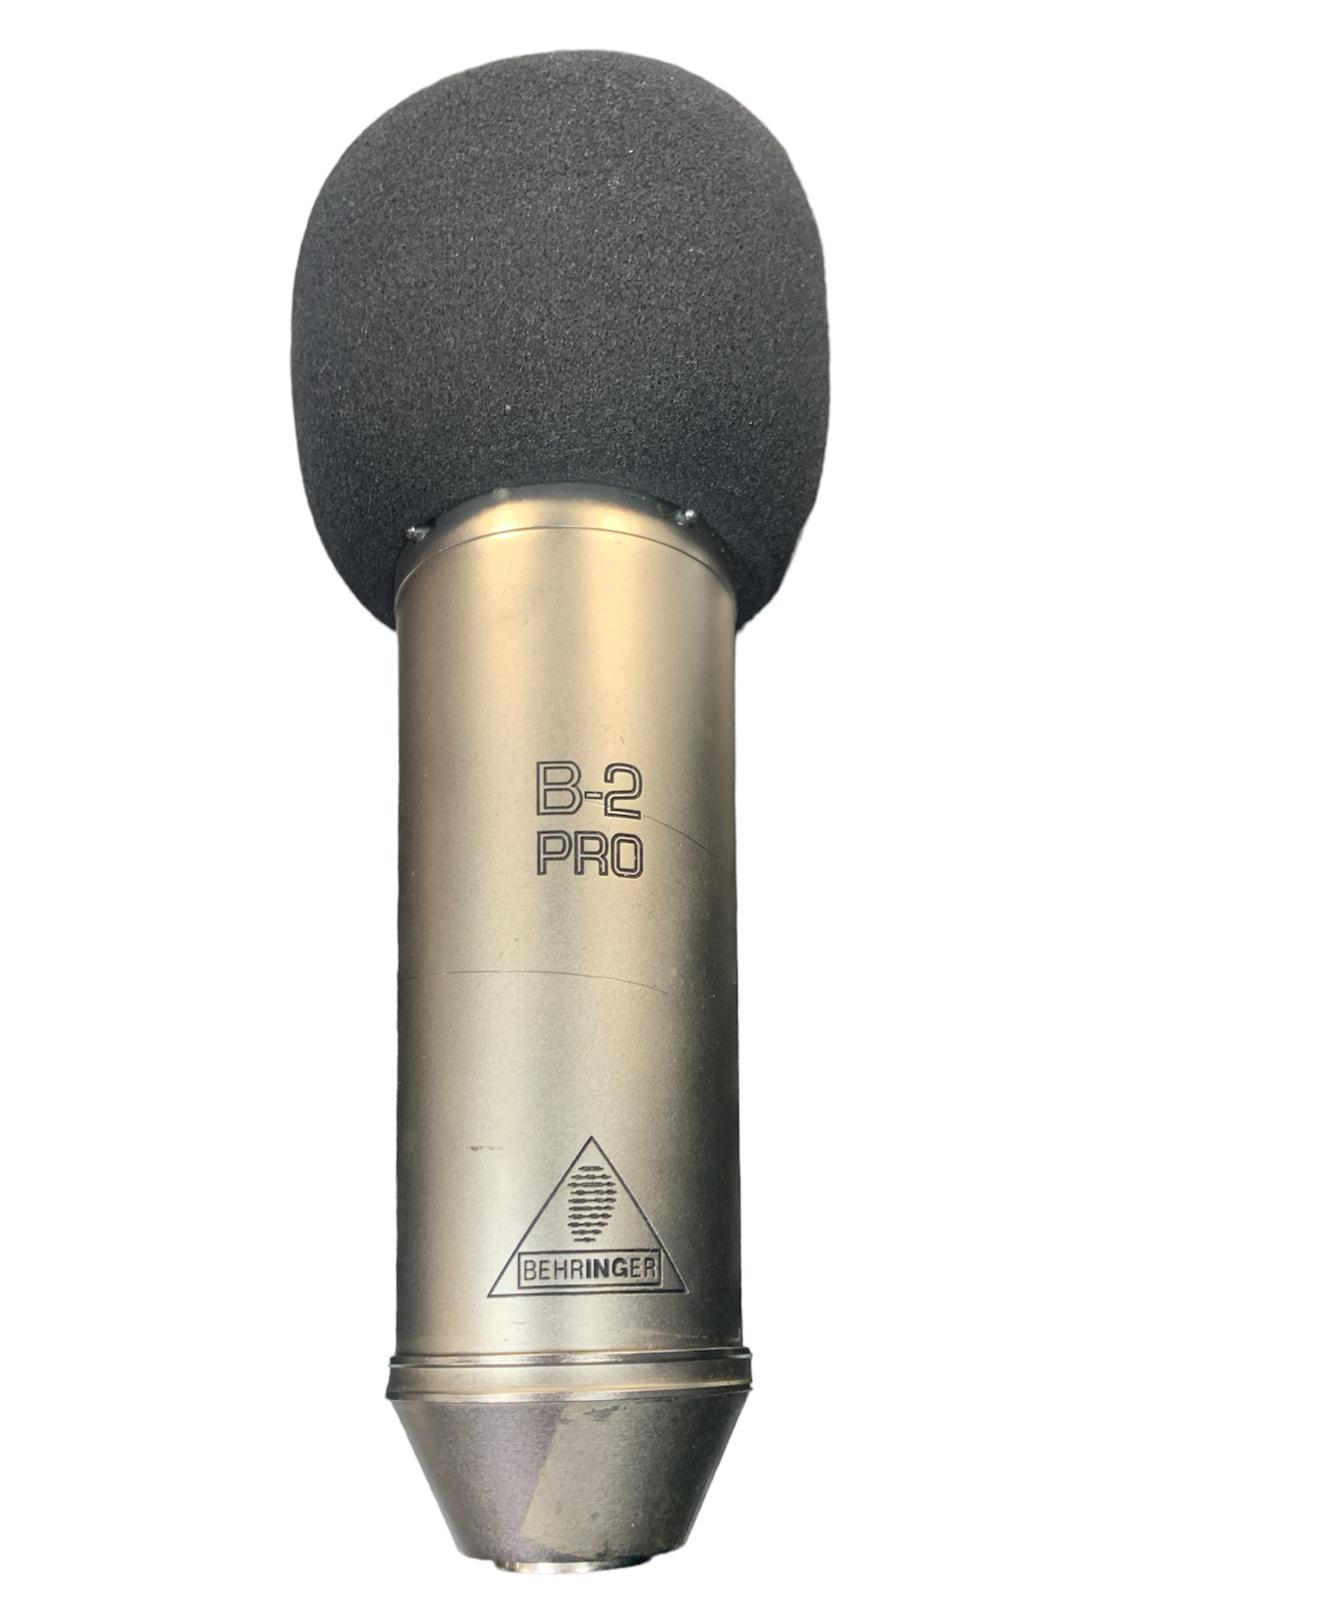 Behringer B-2 Pro Studio Dual Diaphragm Microphone 